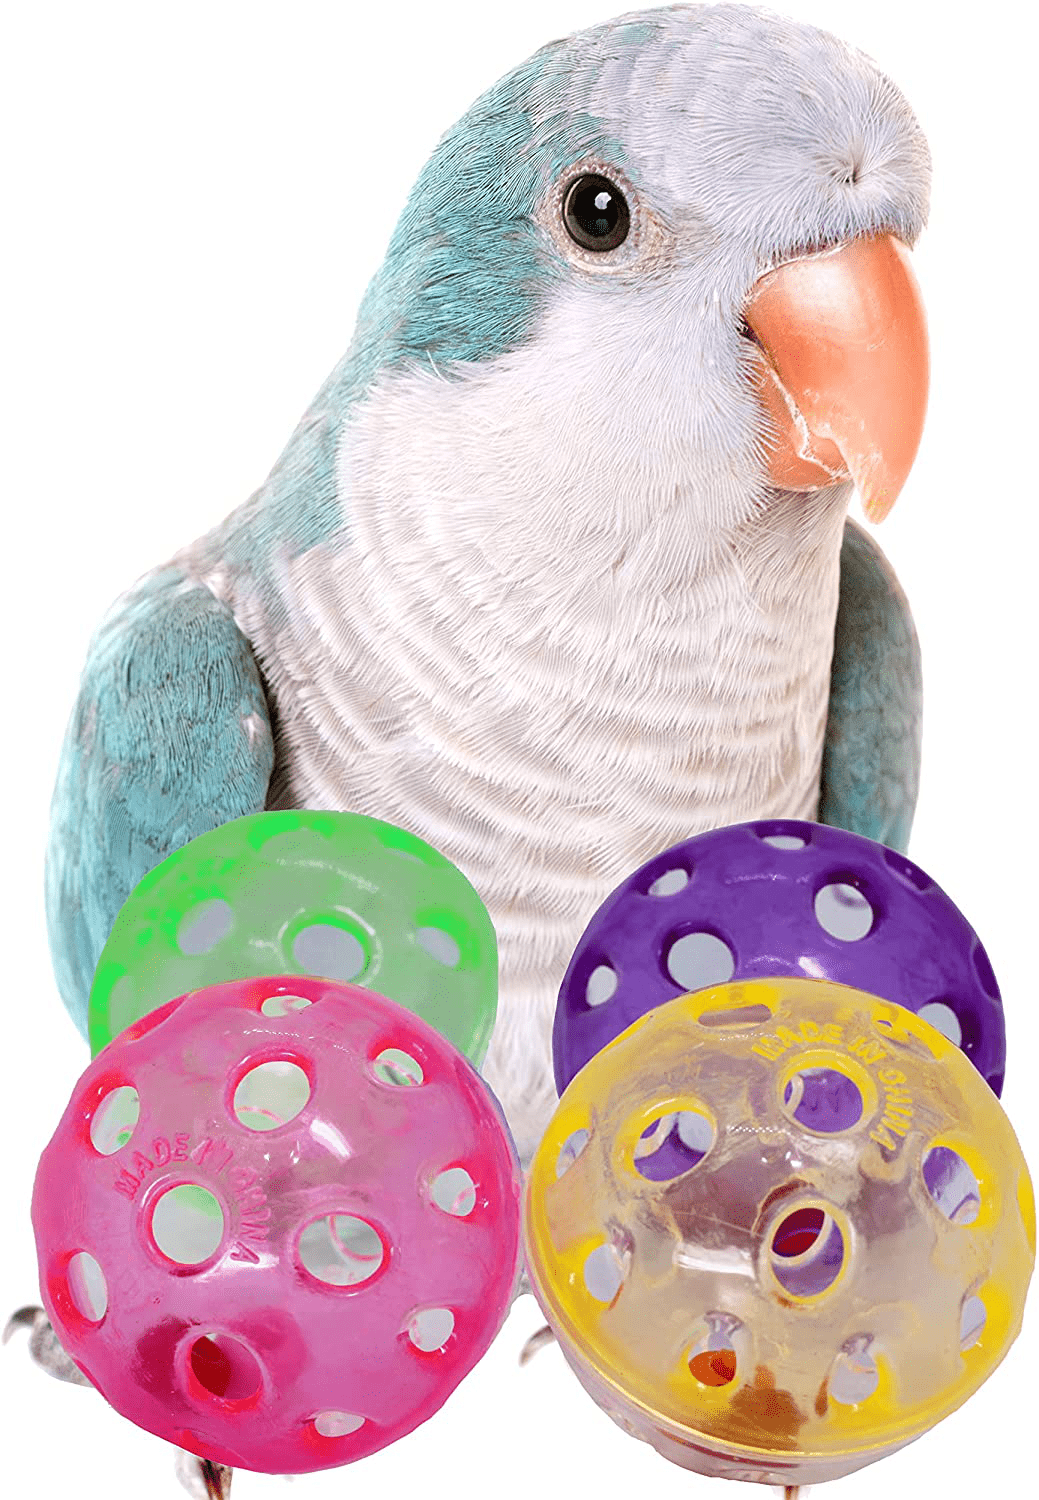 35036 Pk4 Jingle Balls Bonka Bird Toys Colorful Plastic Durable Parrot, Parrotlet, Budgie, Quaker, Cockatiel, Parakeet, Cat, Kitten, and Similer.